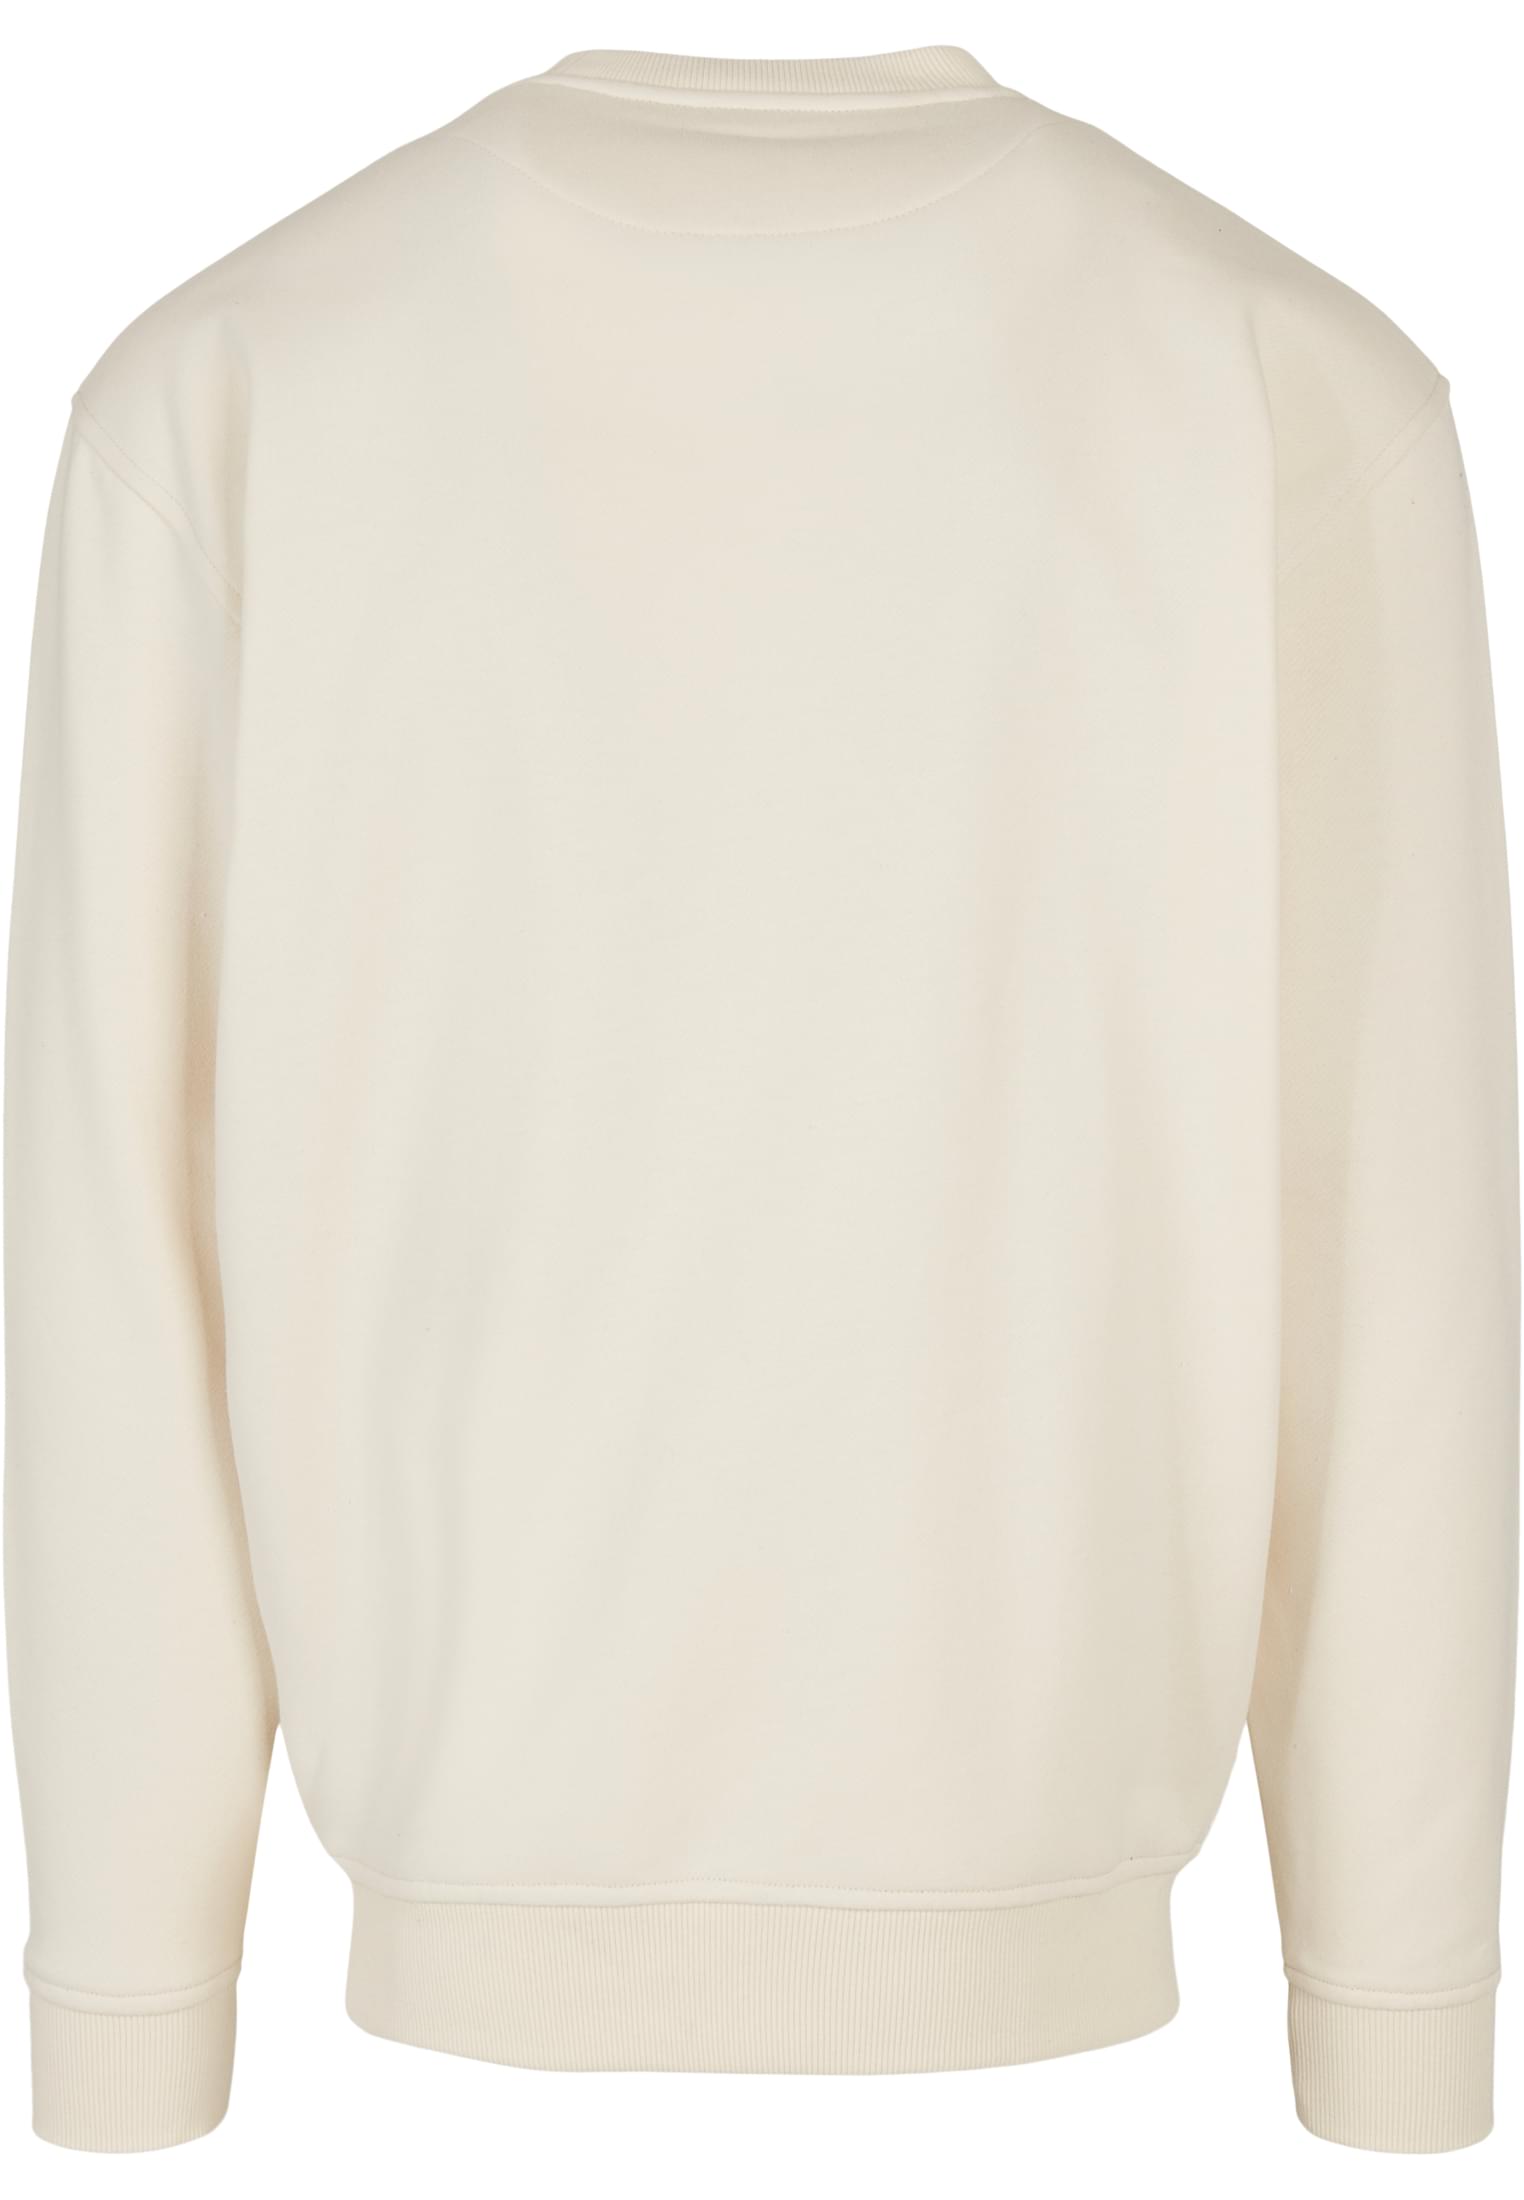 Crewnecks Crewneck Sweatshirt in Farbe whitesand